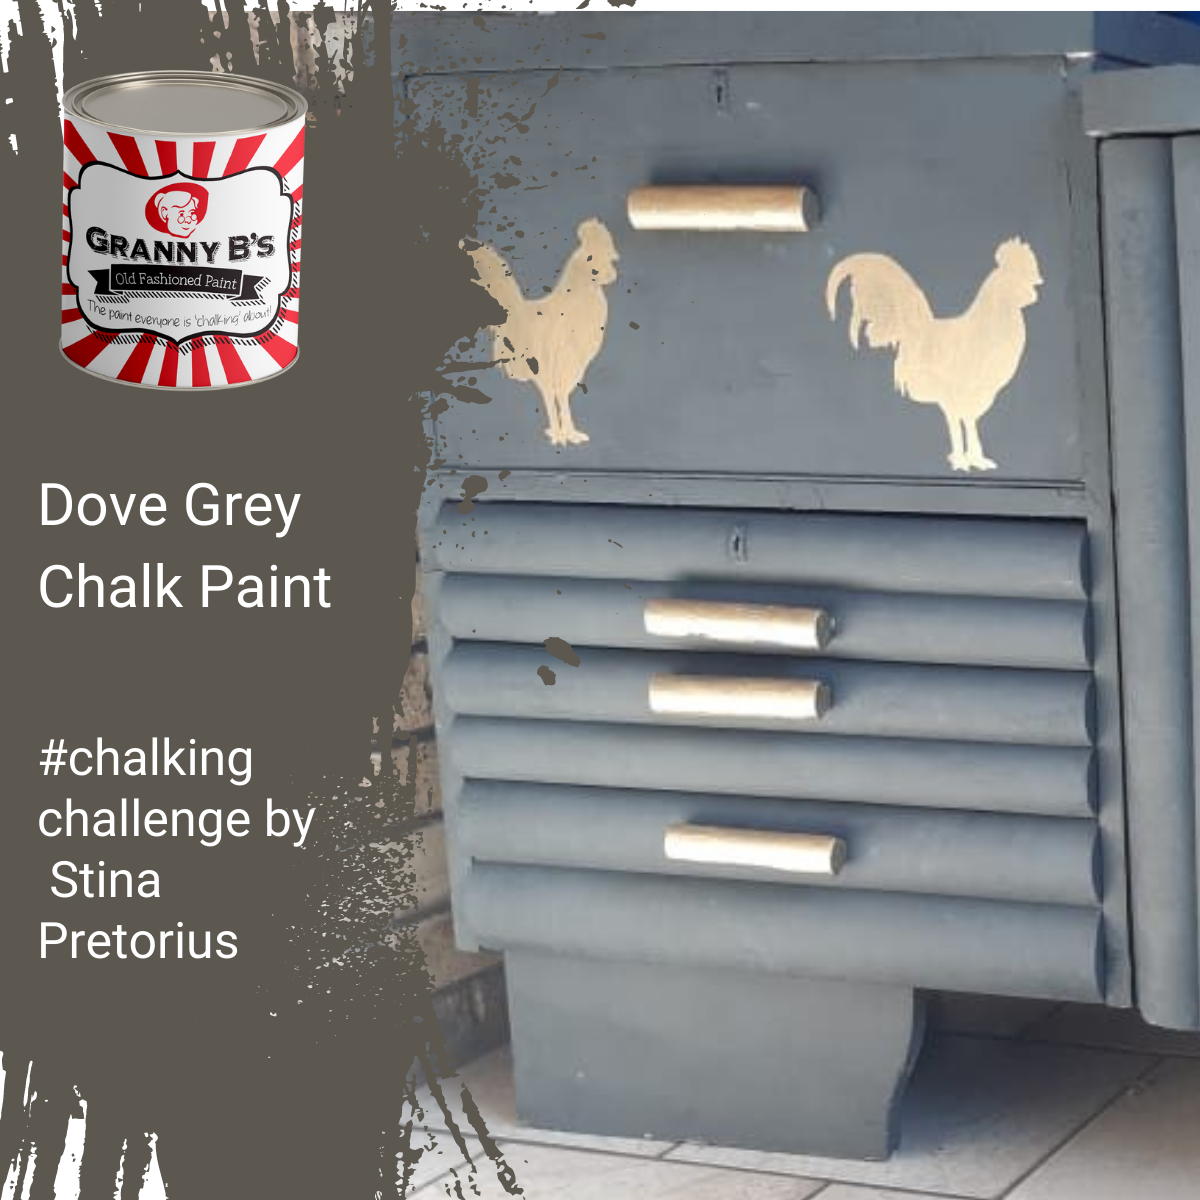 Chalkpaint - Dove Grey (Charcoal)